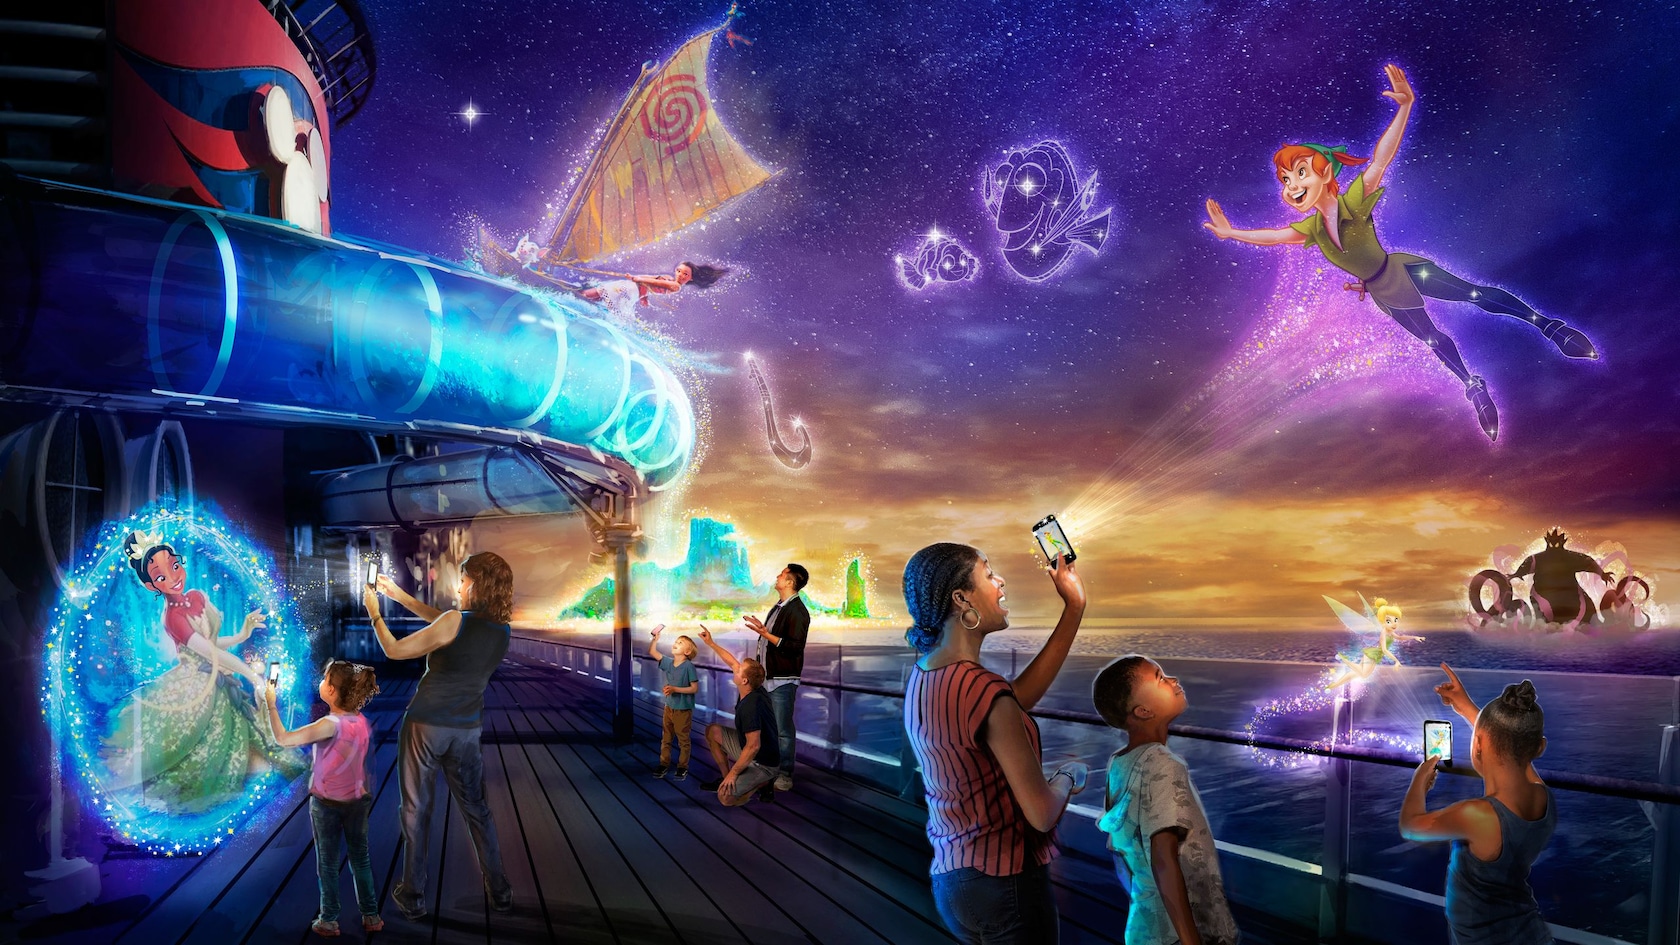 All Aboard! 4 Days 3 Nights on the Disney Wish – Disney Cruise